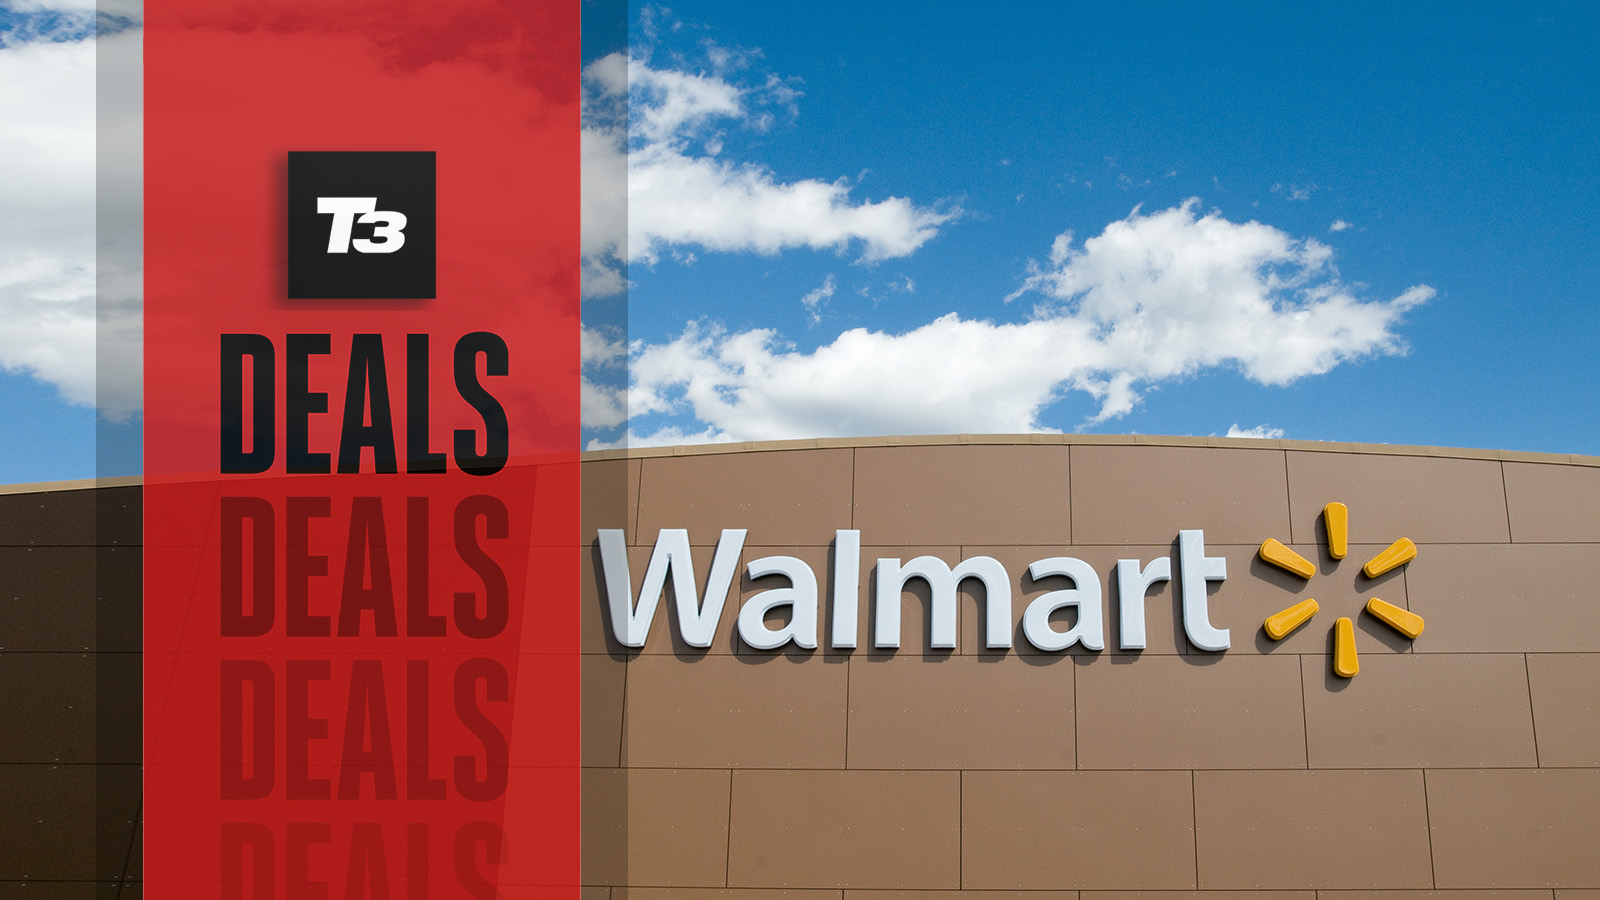 Walmart's Clearance Outlet - Find Walmart Deep Discounts Here!